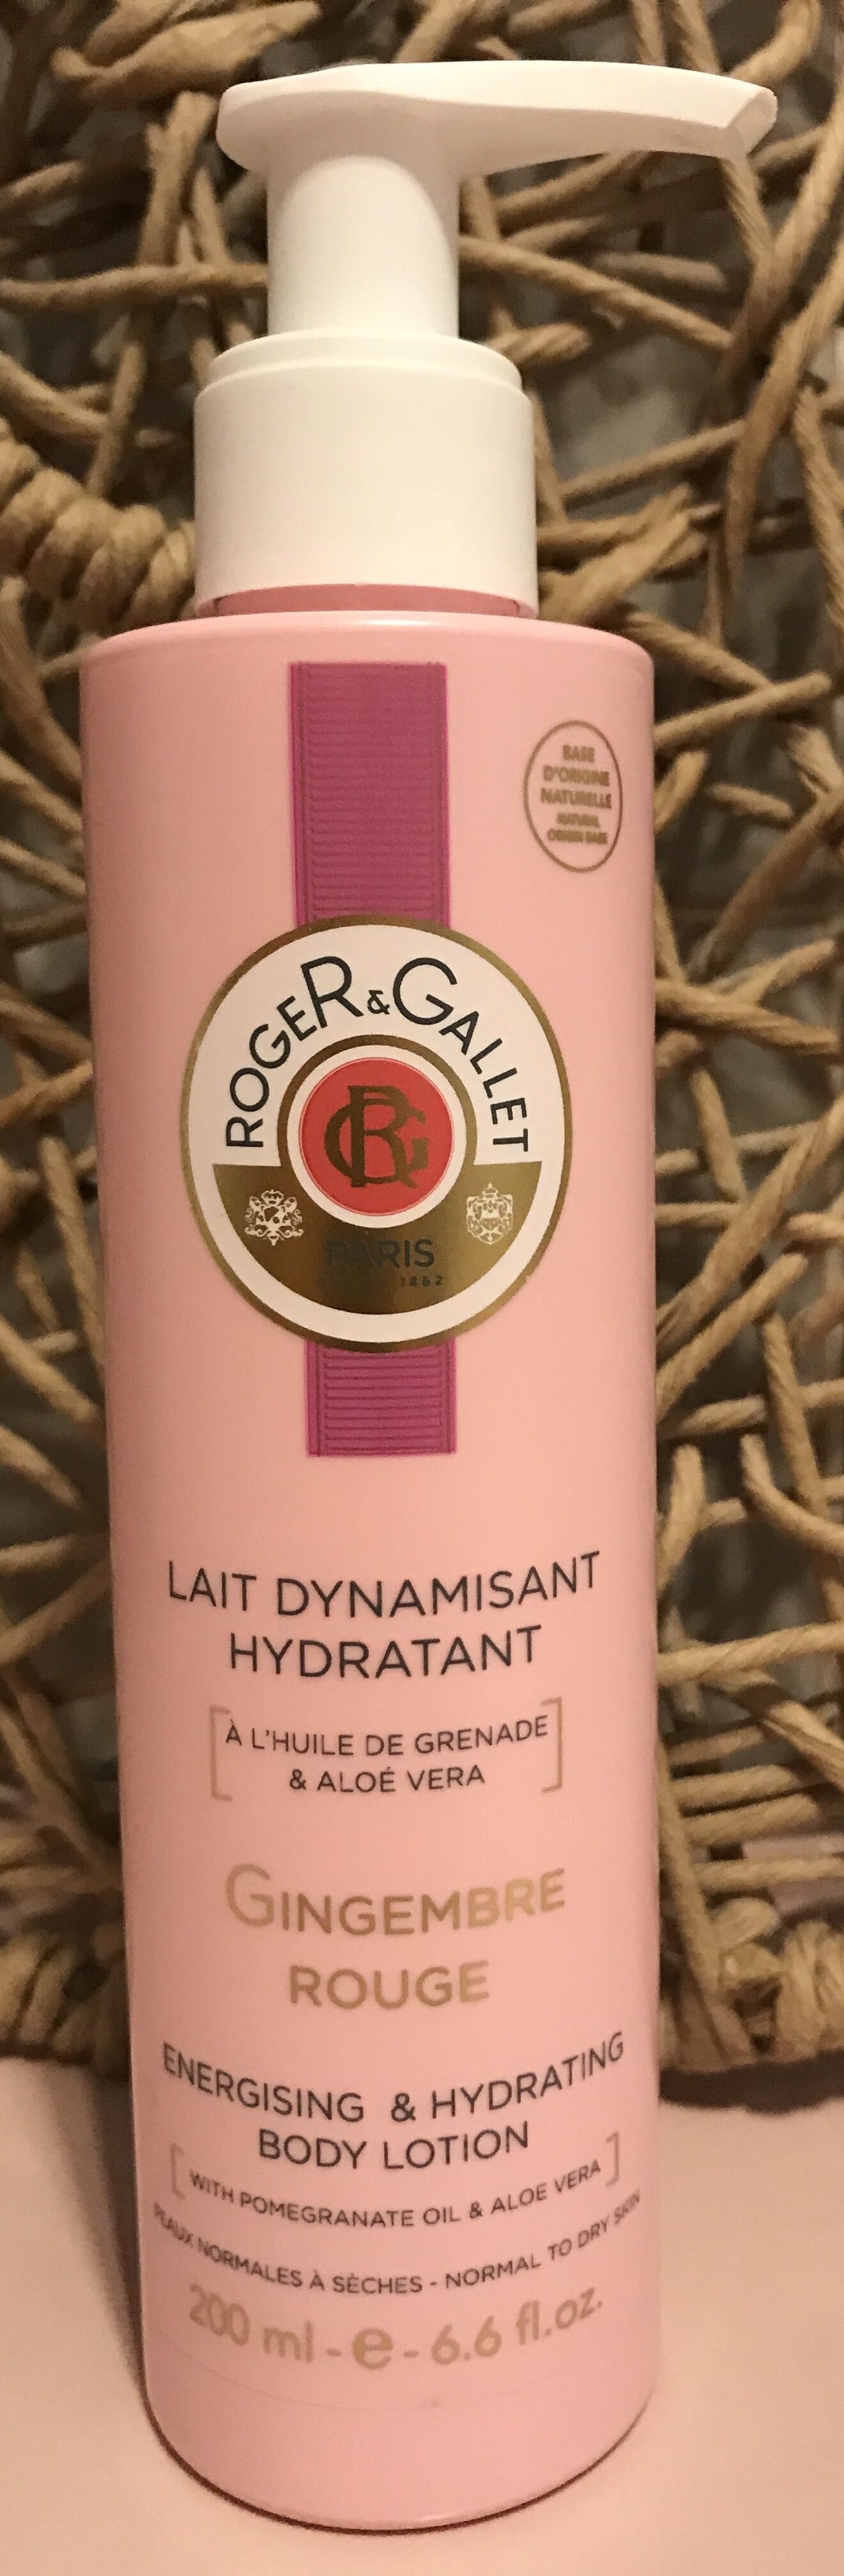 Lait dynamisant hydratant Gingembre Rouge - Produkt - fr